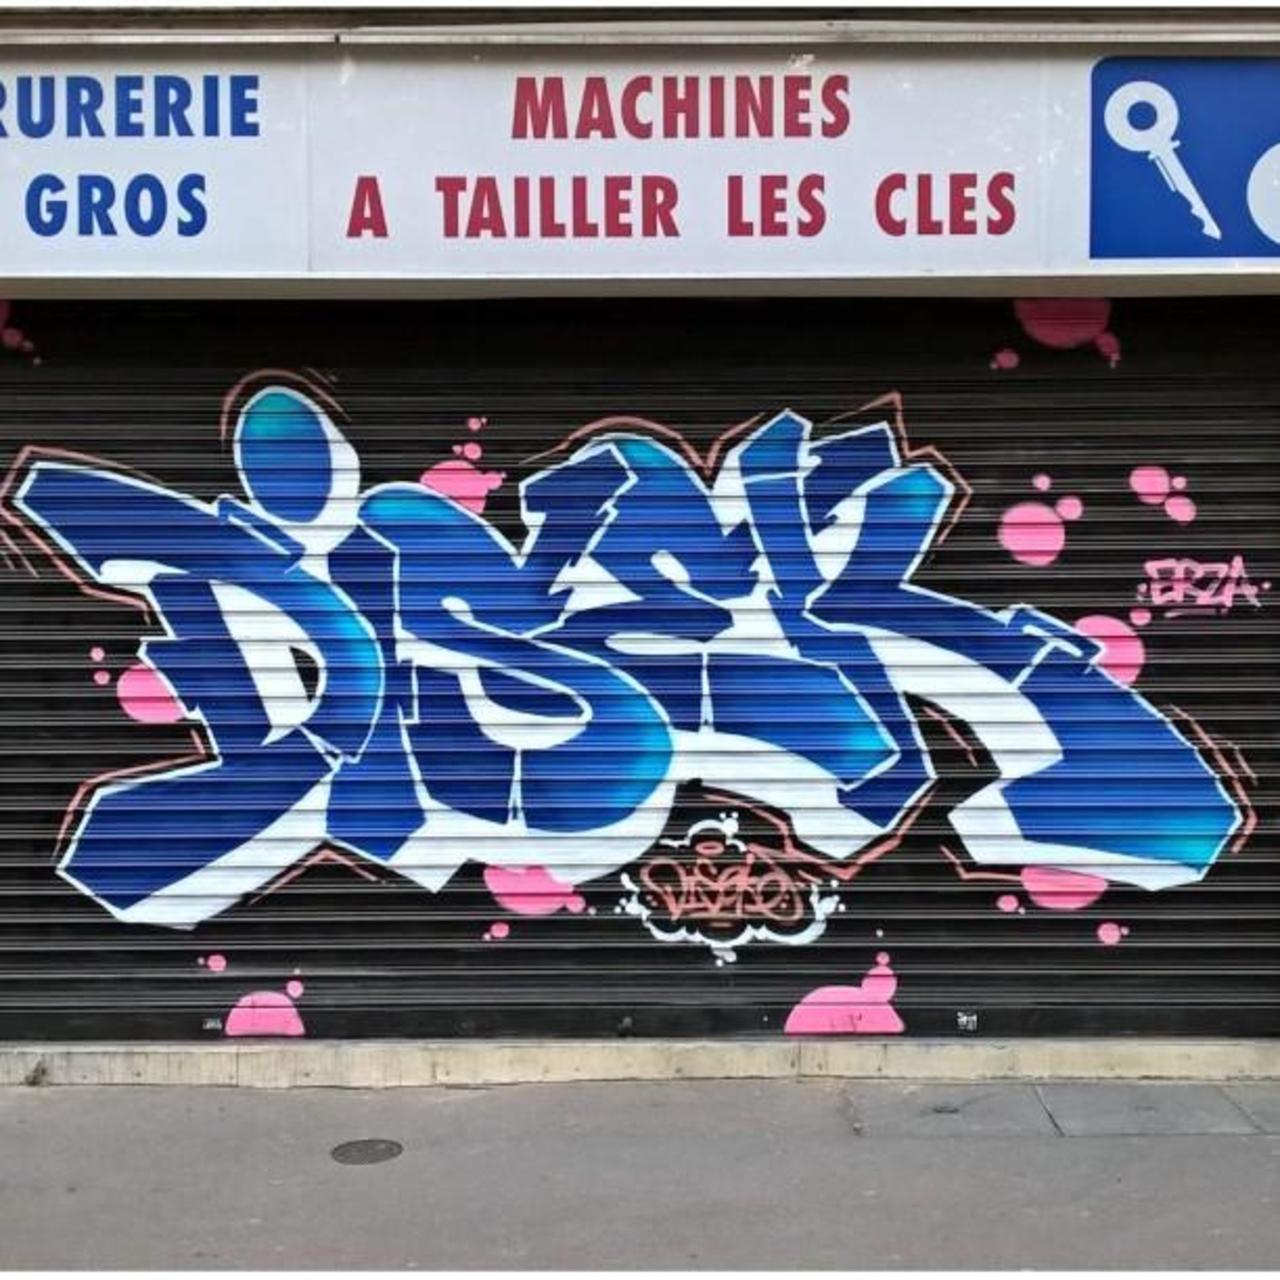 DISEK
#streetart #graffiti #graff #art #fatcap #bombing #sprayart #spraycanart #wallart #handstyle #lettering #urba… http://t.co/NP7XFtInRY